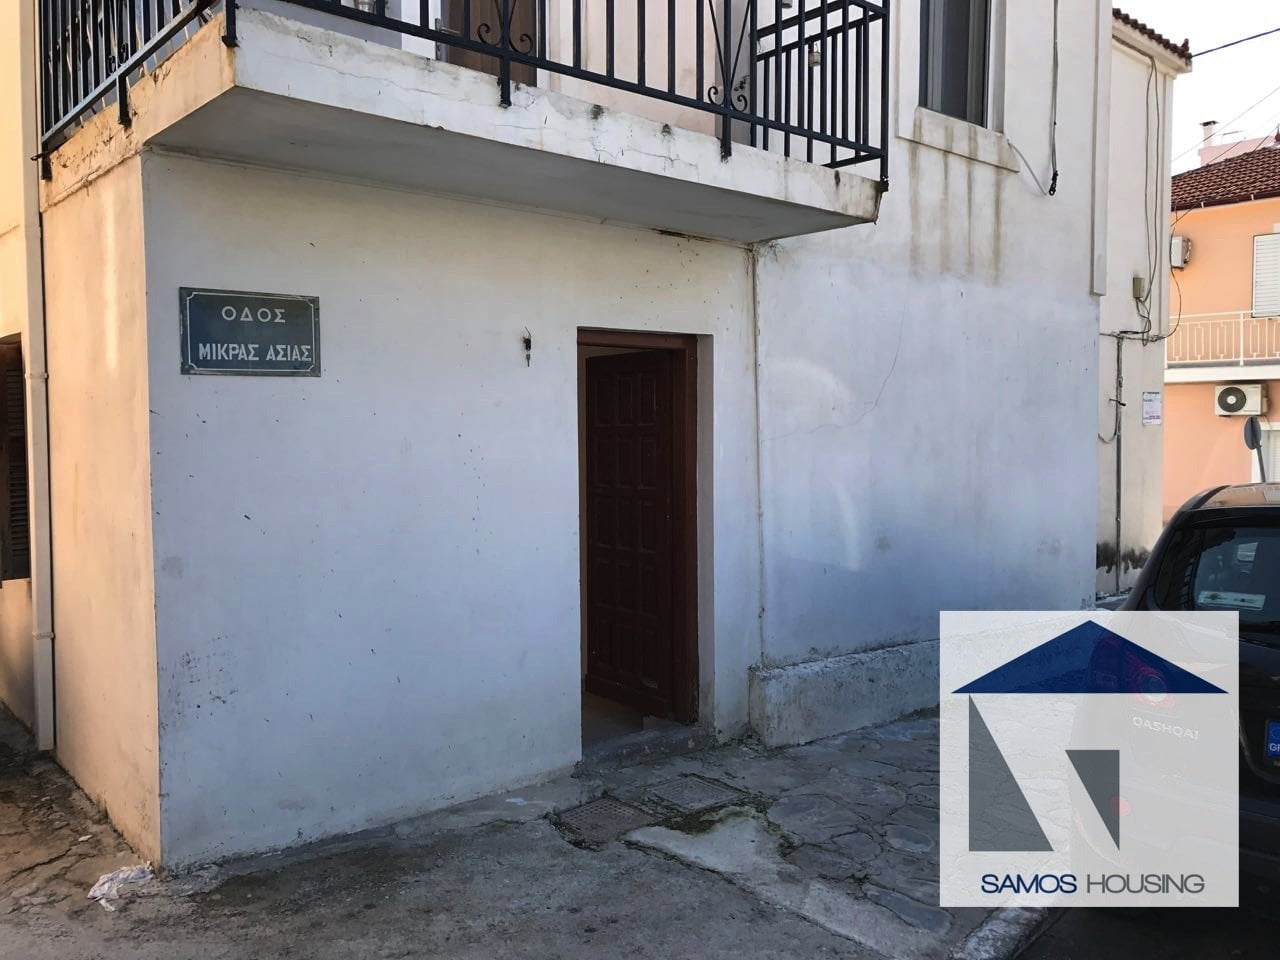 SH158 Διαμέρισμα στο κέντρο της Σάμου - image SH158-Apartment-in-Samos-Town-Excellent-Location-general-imp on https://www.samoshousing.com